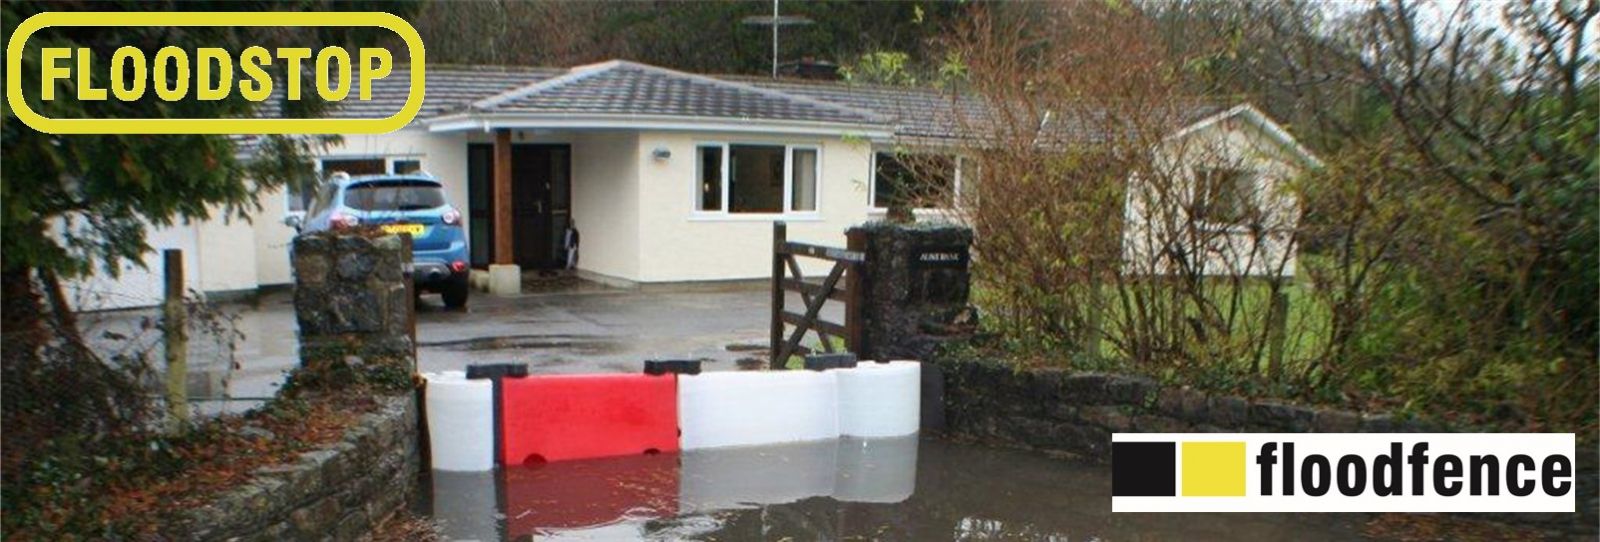 Floodstop Floodfence